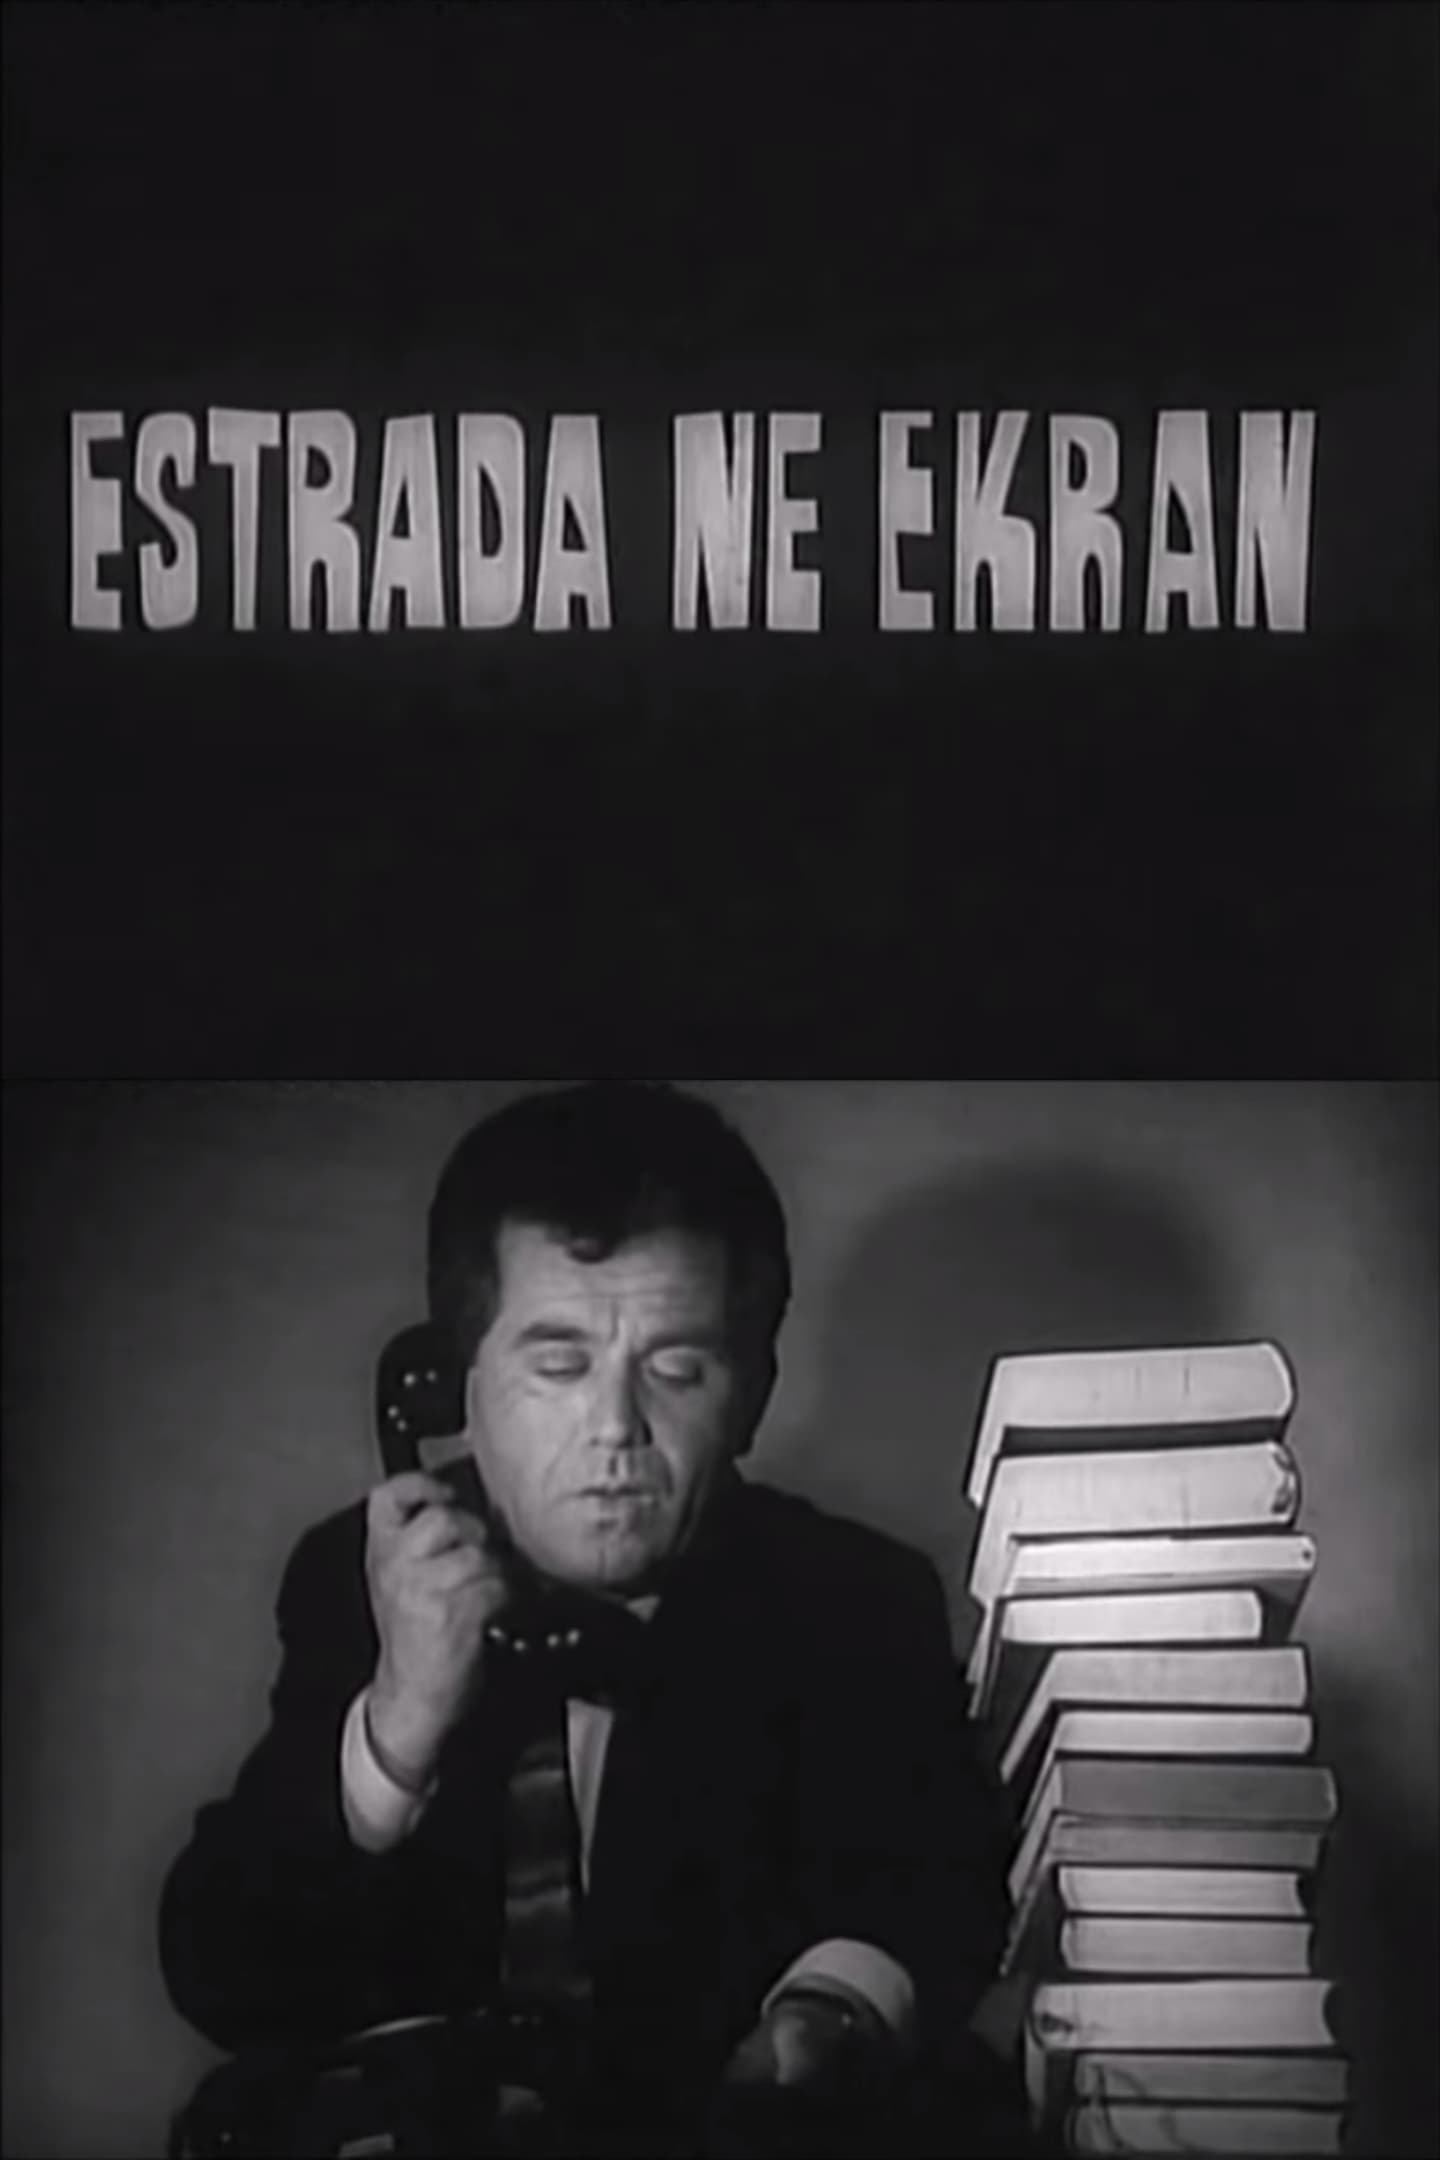 Estrada on the Screen